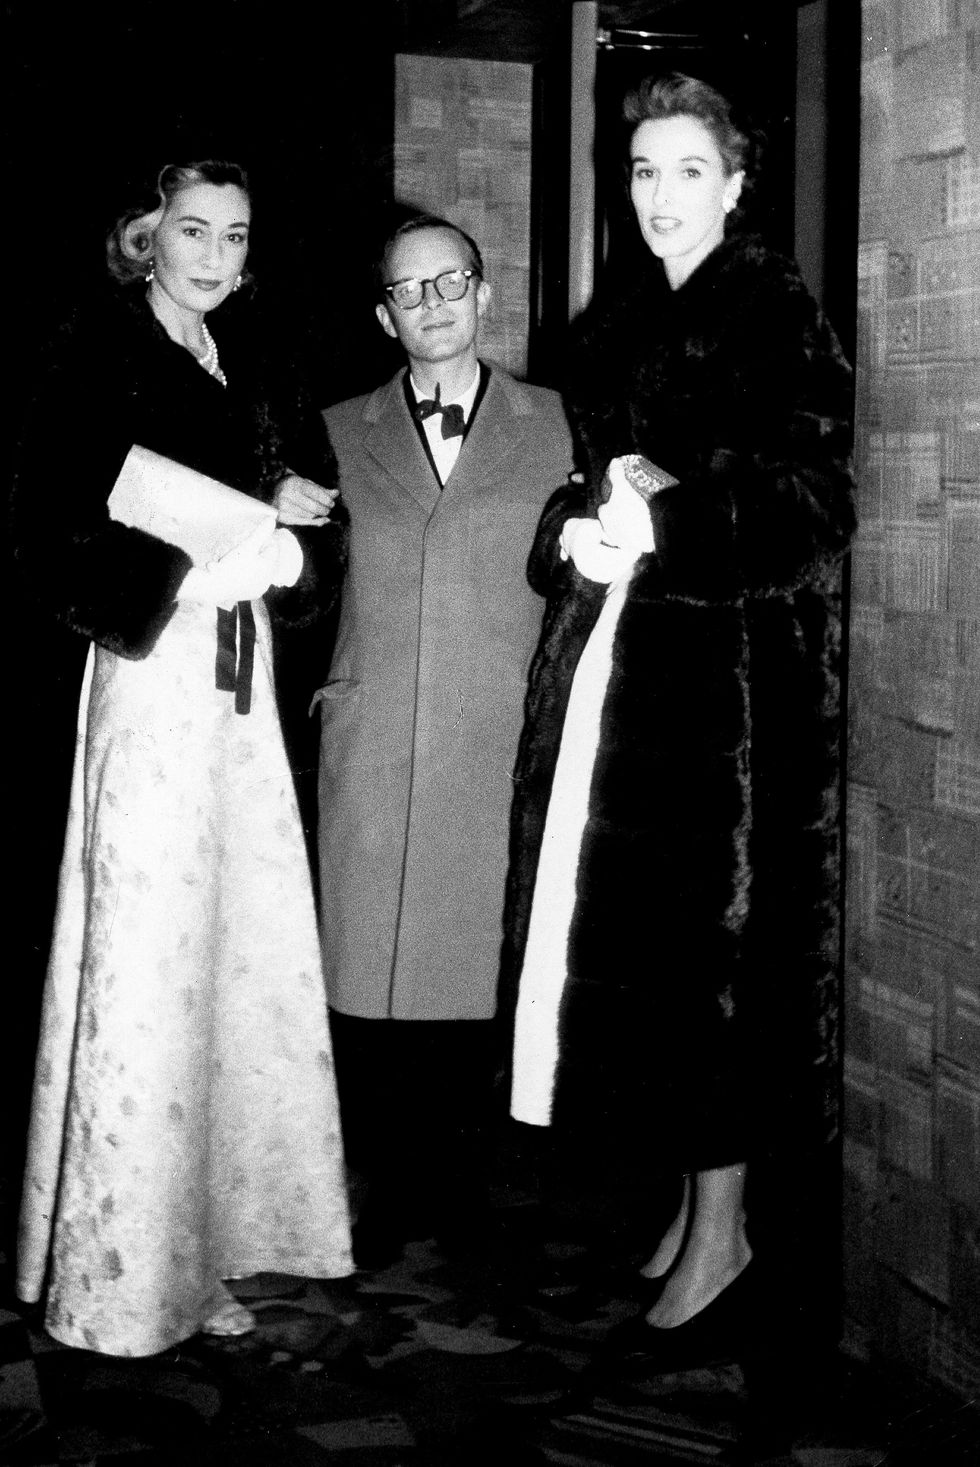 l r gloria guinness, truman capote, and barbara paley ca 1957 photo by ullstein bildullstein bild via getty images